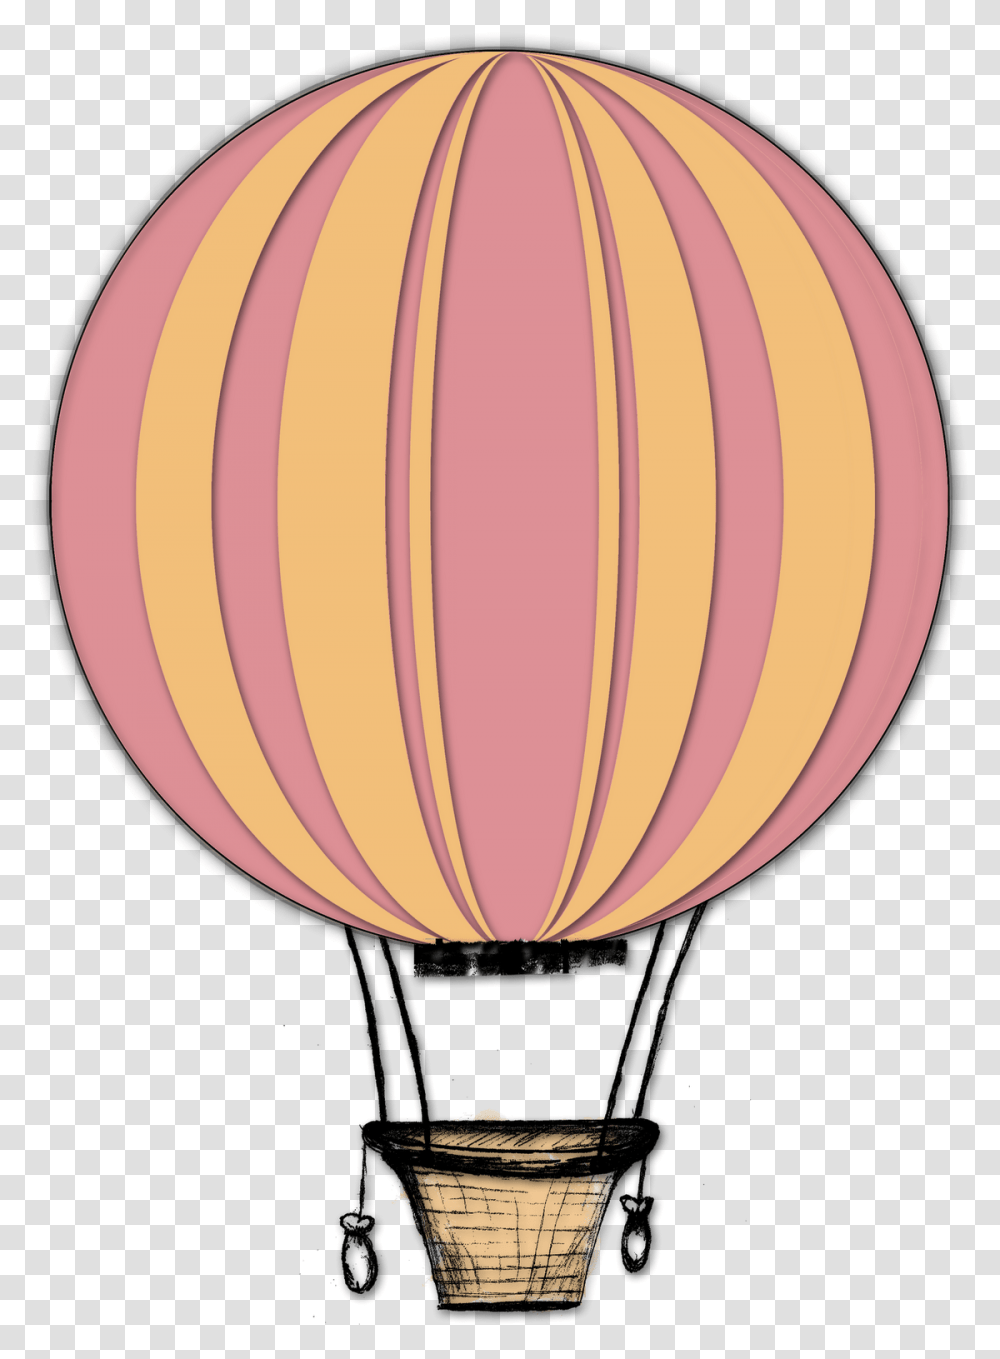 Hot Air Balloon Clipart Images Vintage Hot Air Balloon Clipart, Aircraft, Vehicle, Transportation Transparent Png